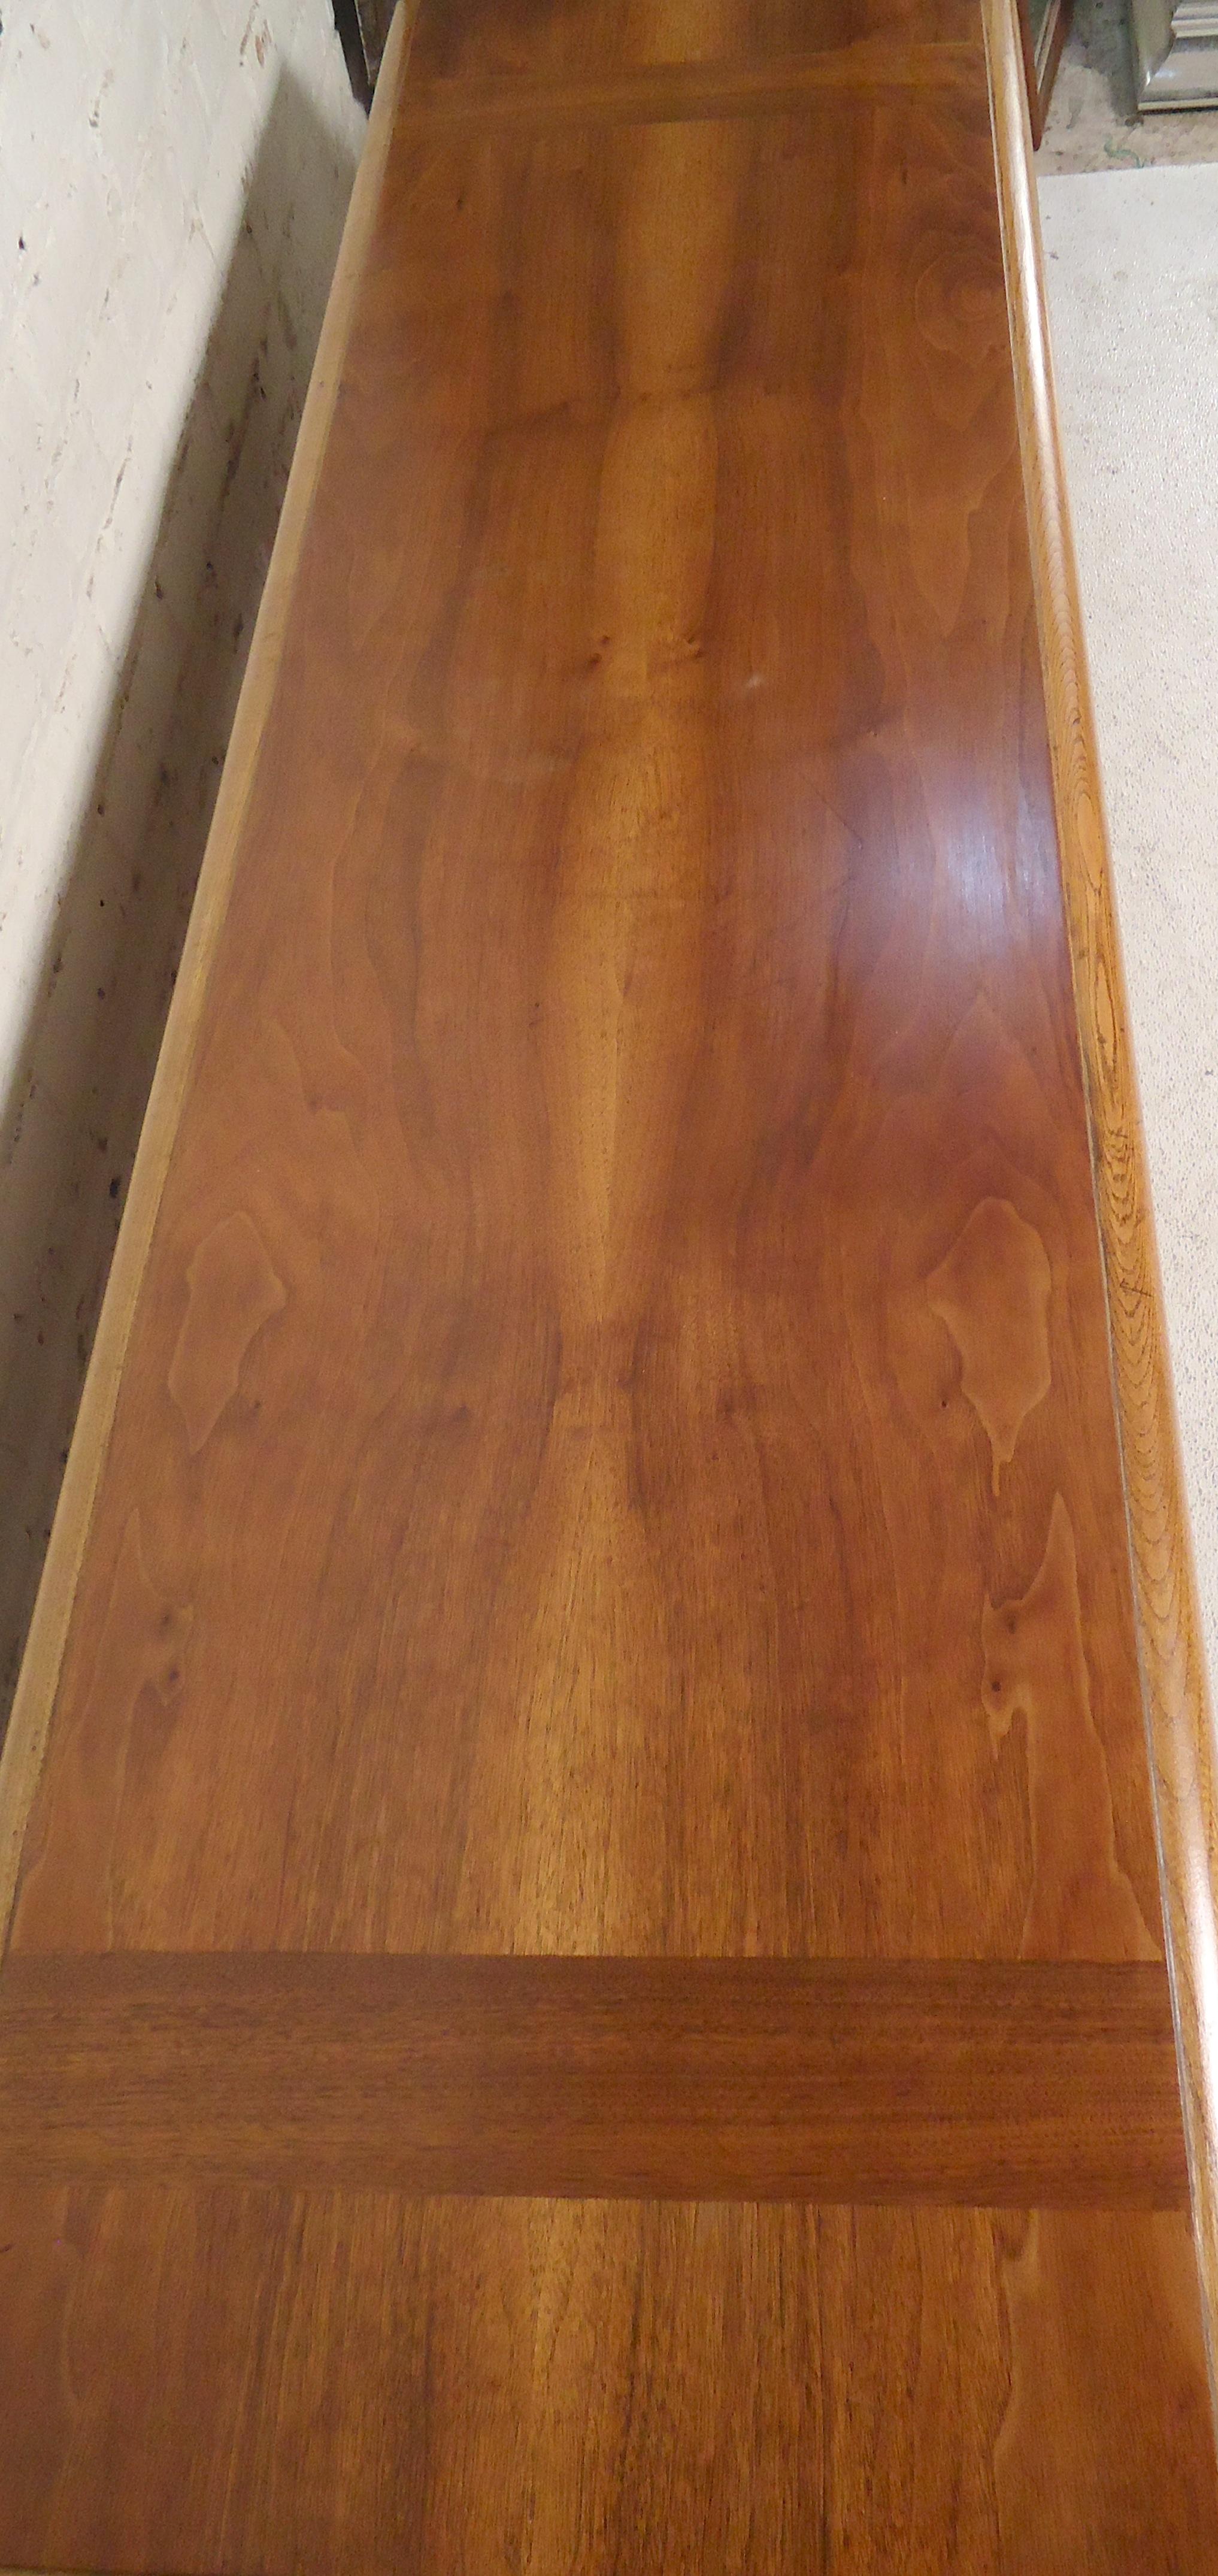 Walnut coffee table with bottom shelf. Warm walnut grain with oak base.

(Please confirm item location - NY or NJ - with dealer).
 